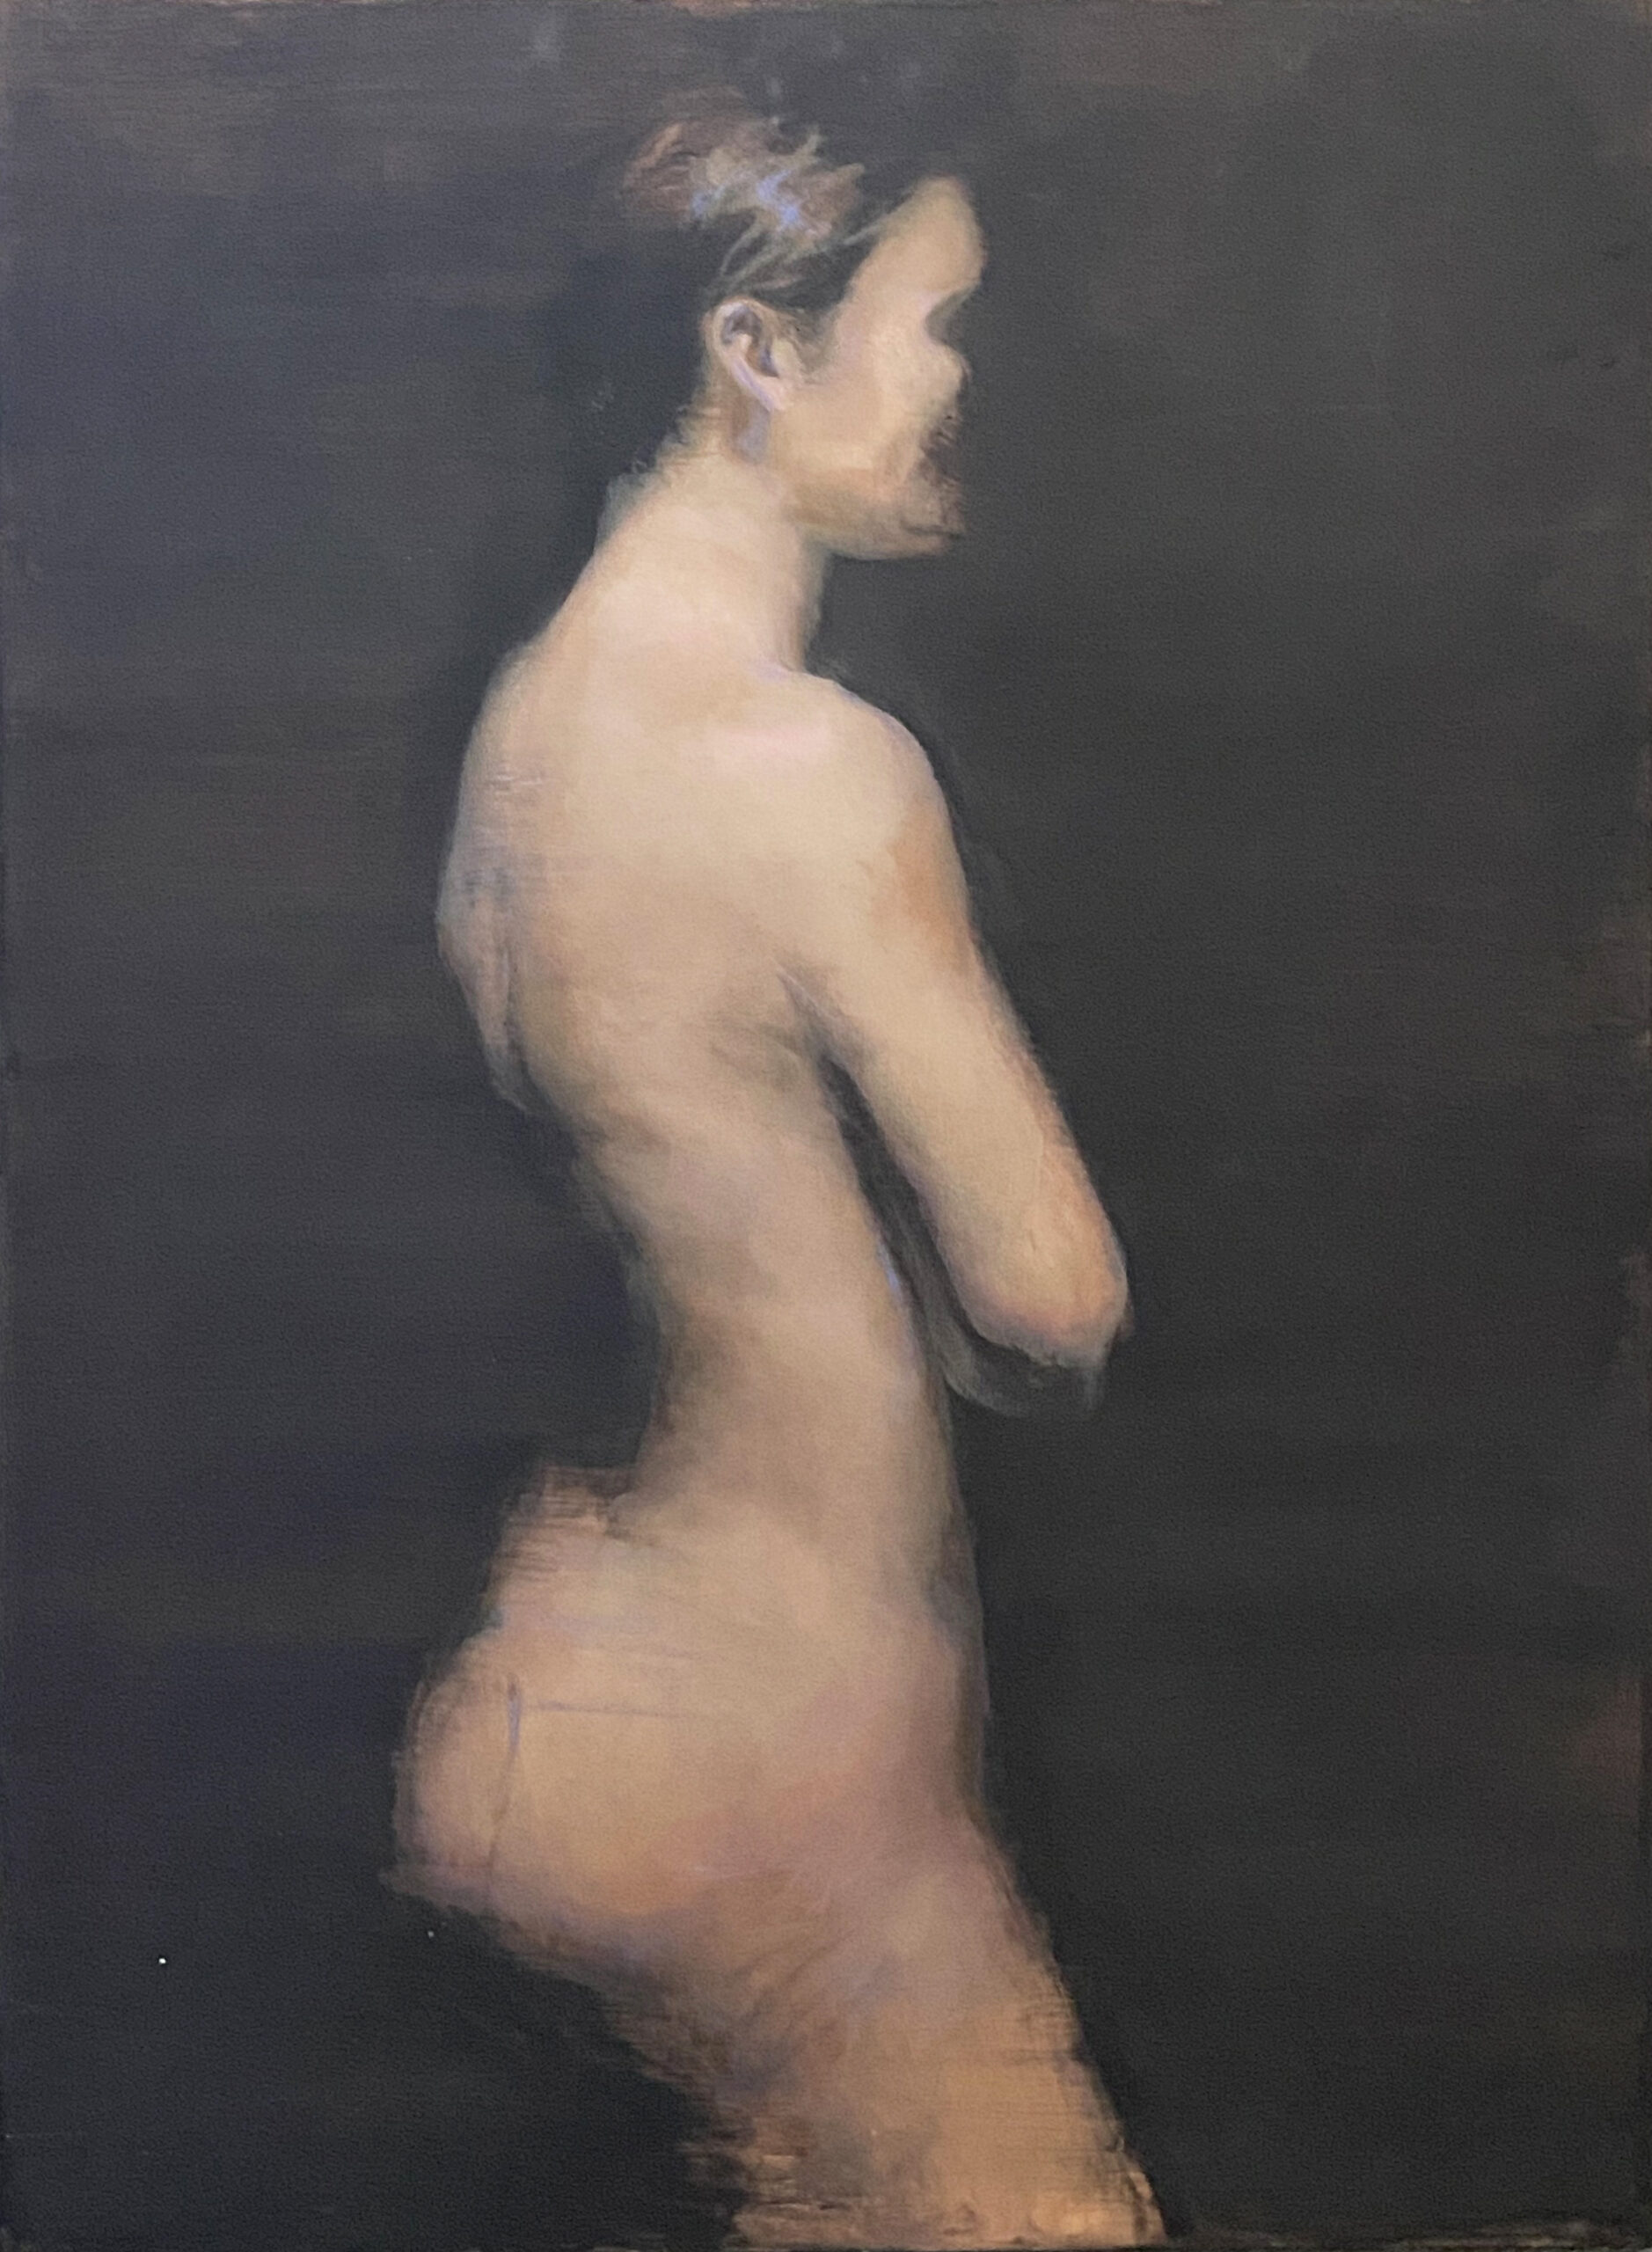 figurative art "Nude 1" by Juliette Aristides